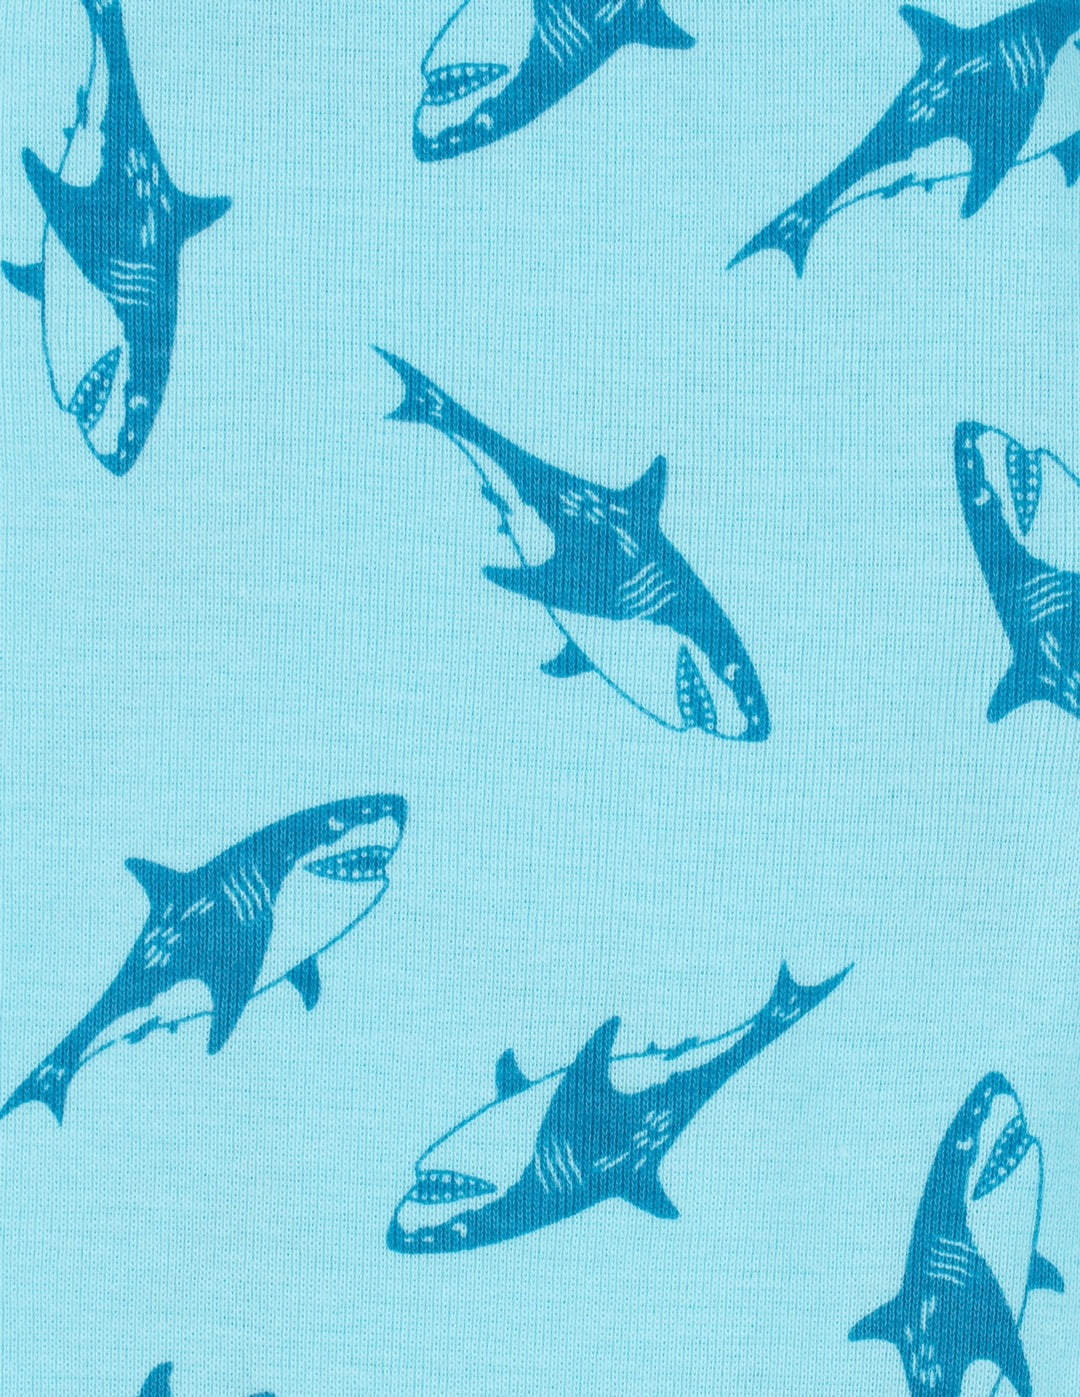 Shark Shirt Adult Large Tie Dye Shark T-shirt Mens Tie Dye 